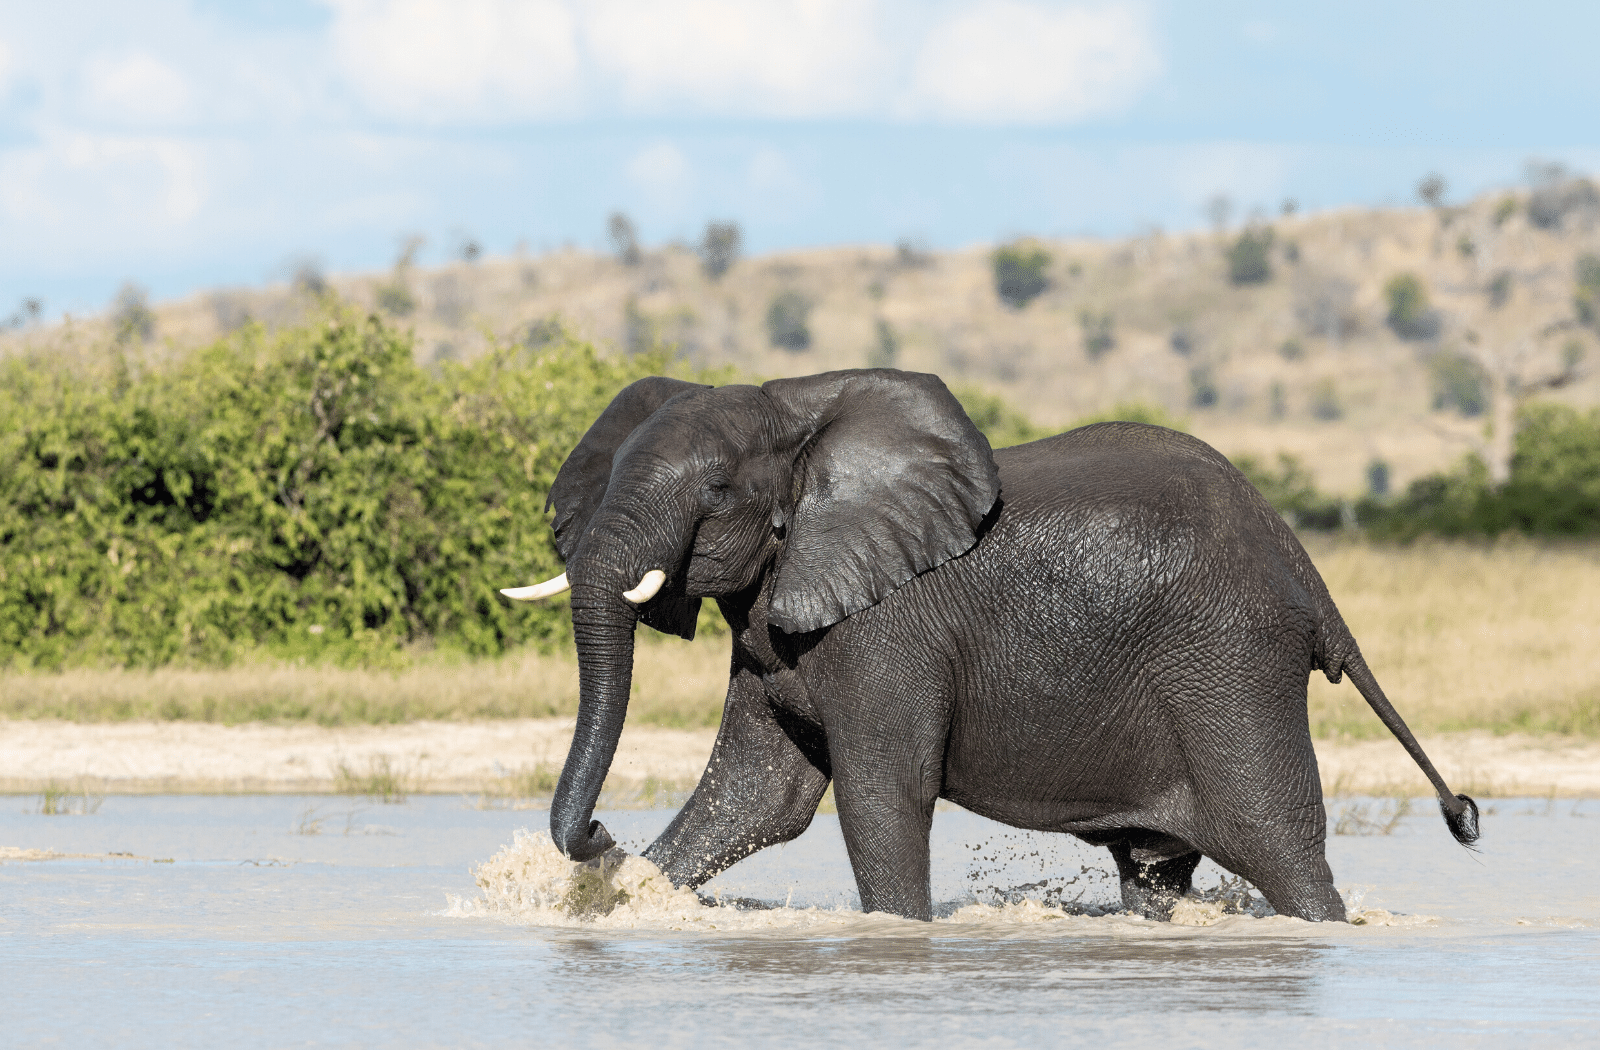 Elephant bathing in the water in Savuti, Botswana